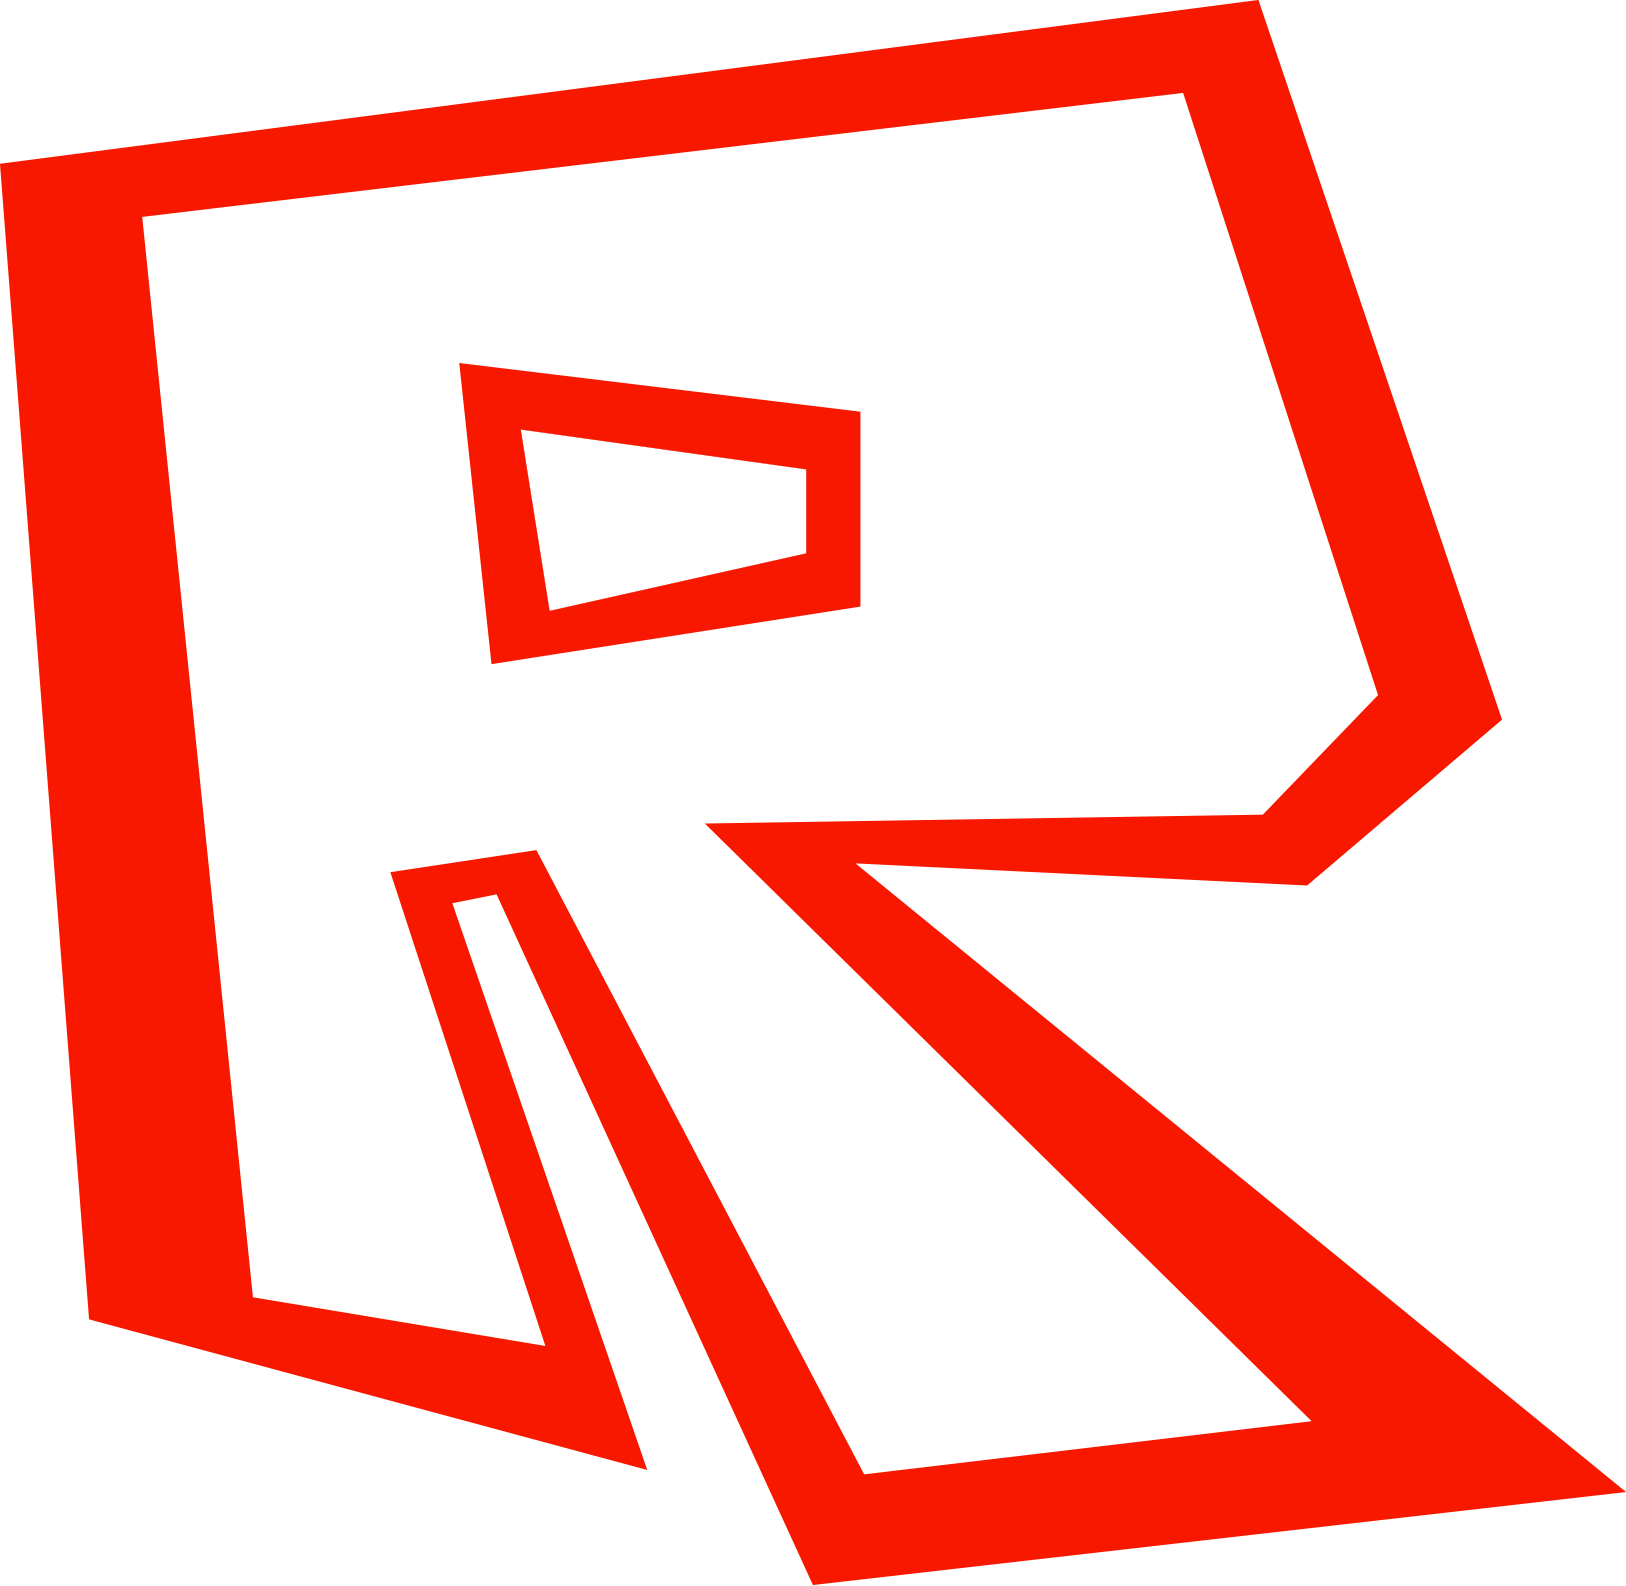 roblox event logo